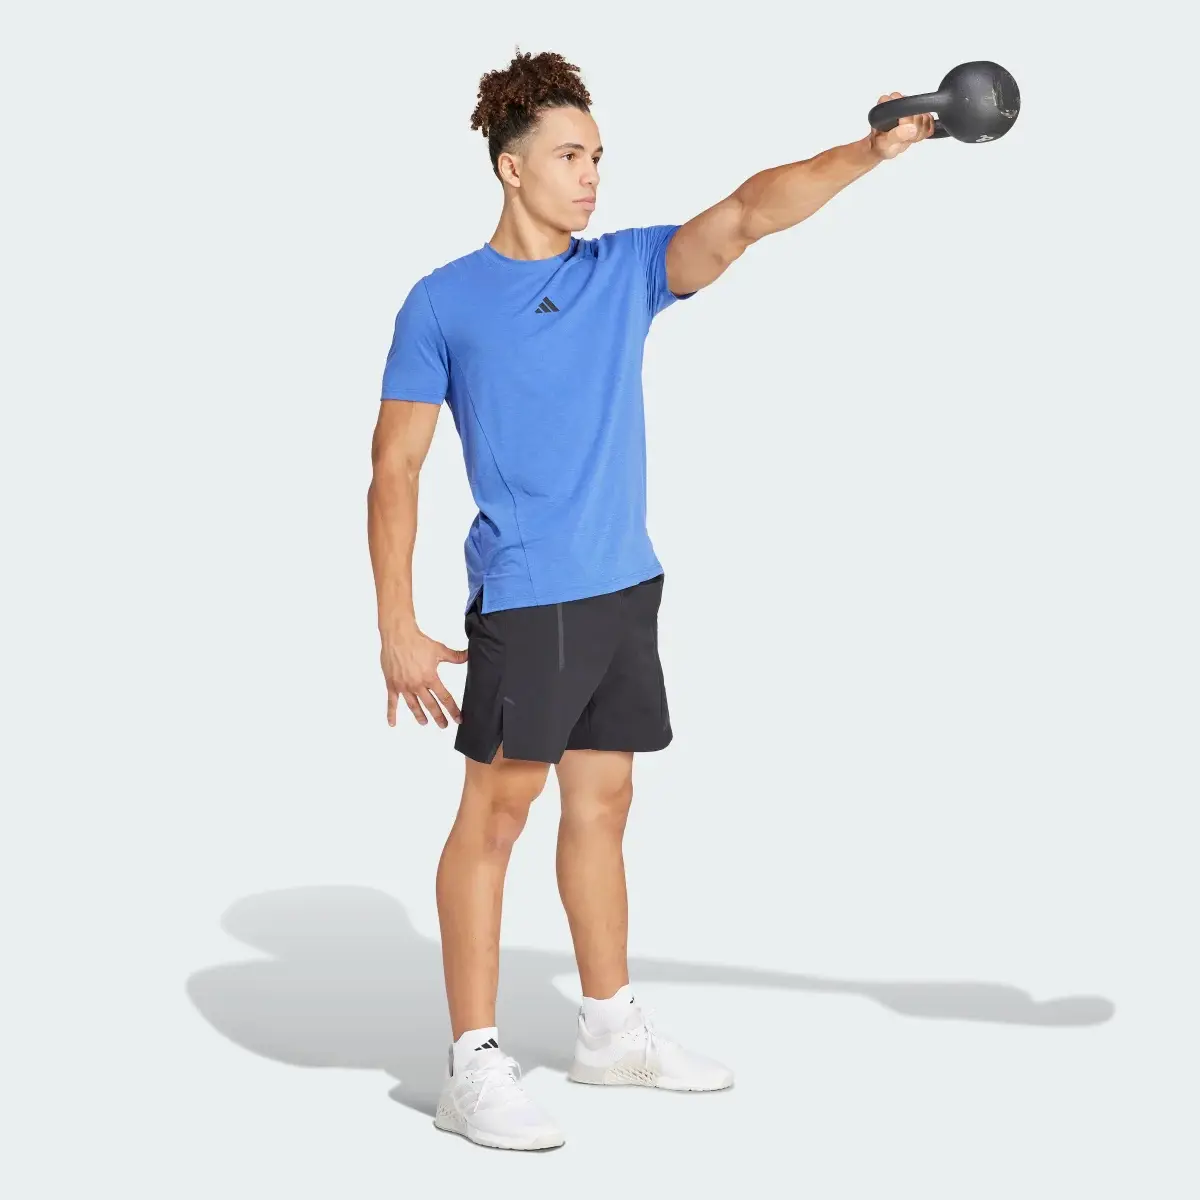 Adidas T-shirt Designed for Training Workout. 3